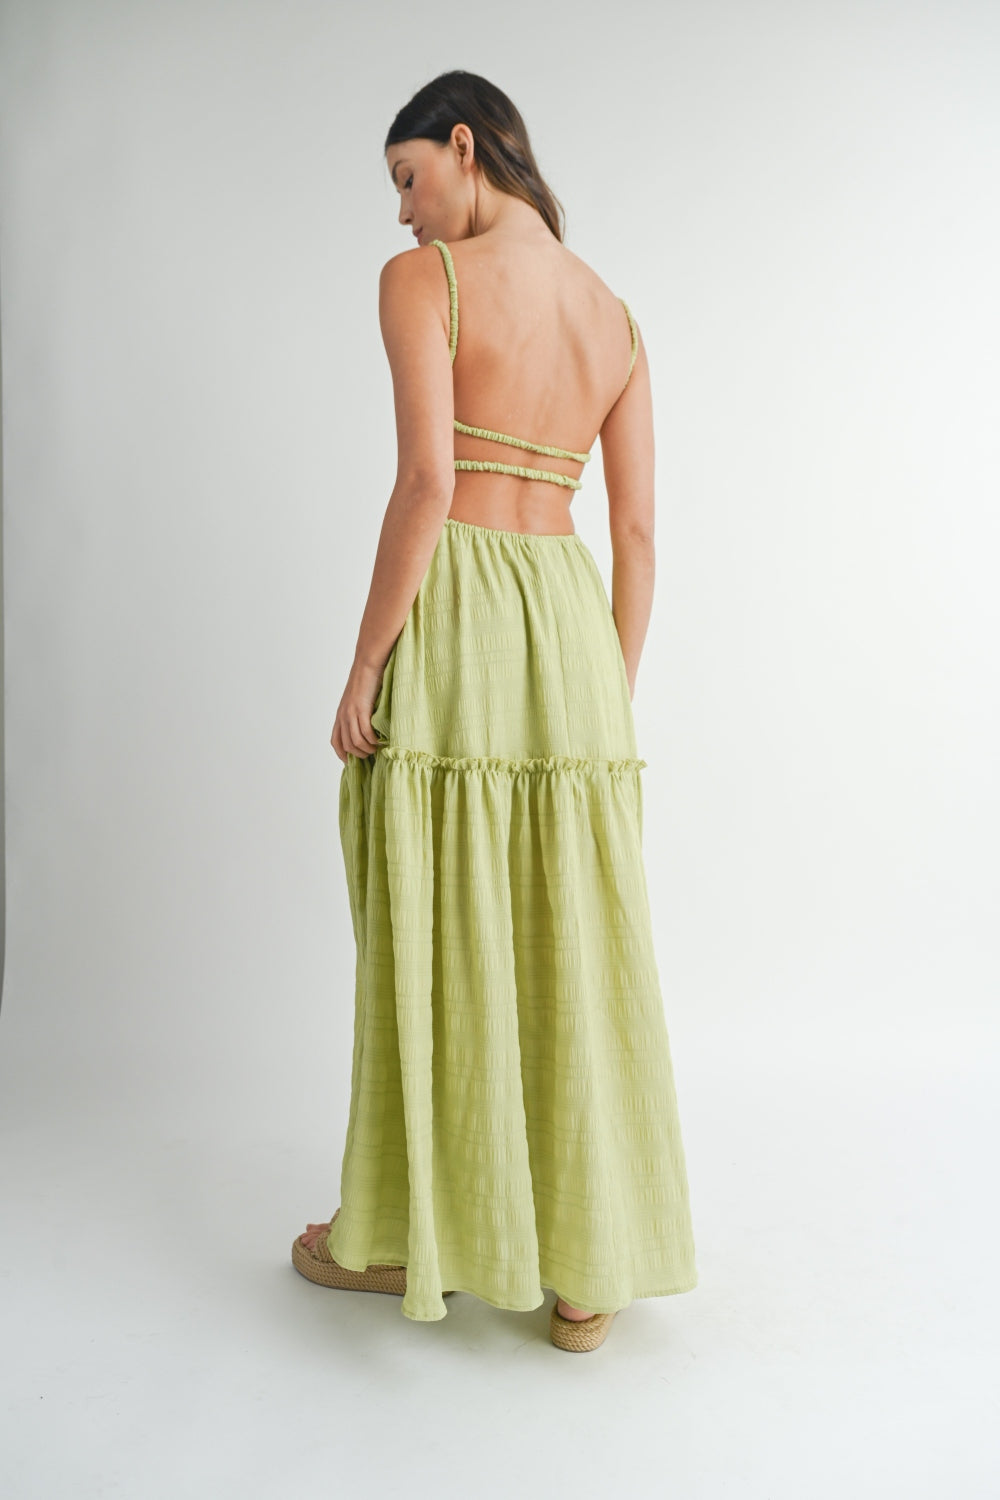 TEEK - Sage Cutout Waist Backless Maxi Dress DRESS TEEK Trend   